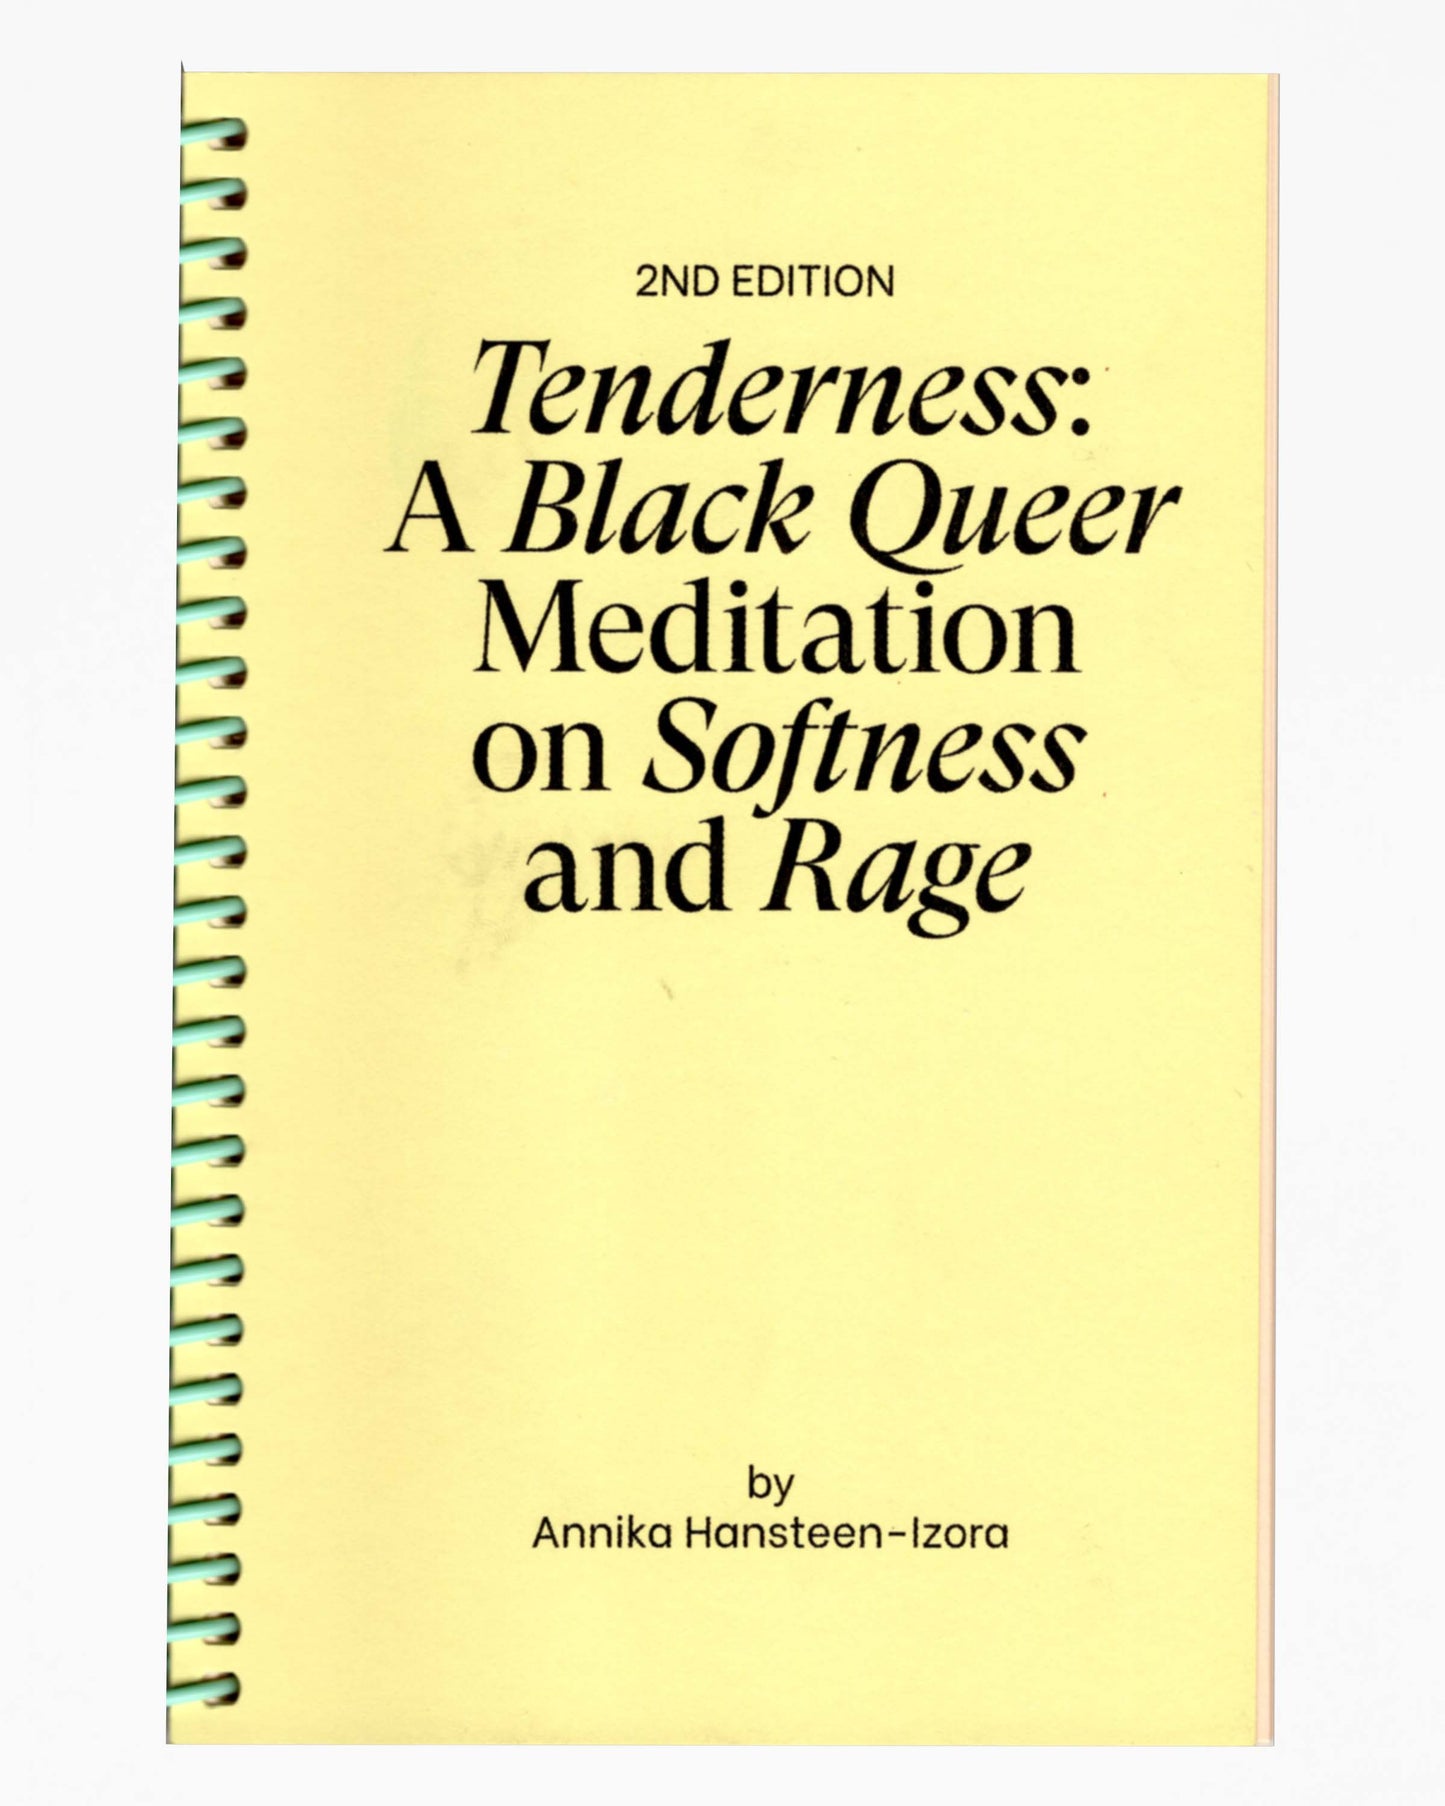 Annika Hansteen-Izora - Tenderness: A Black Queer Meditation on Softness and Rage - Second Edition